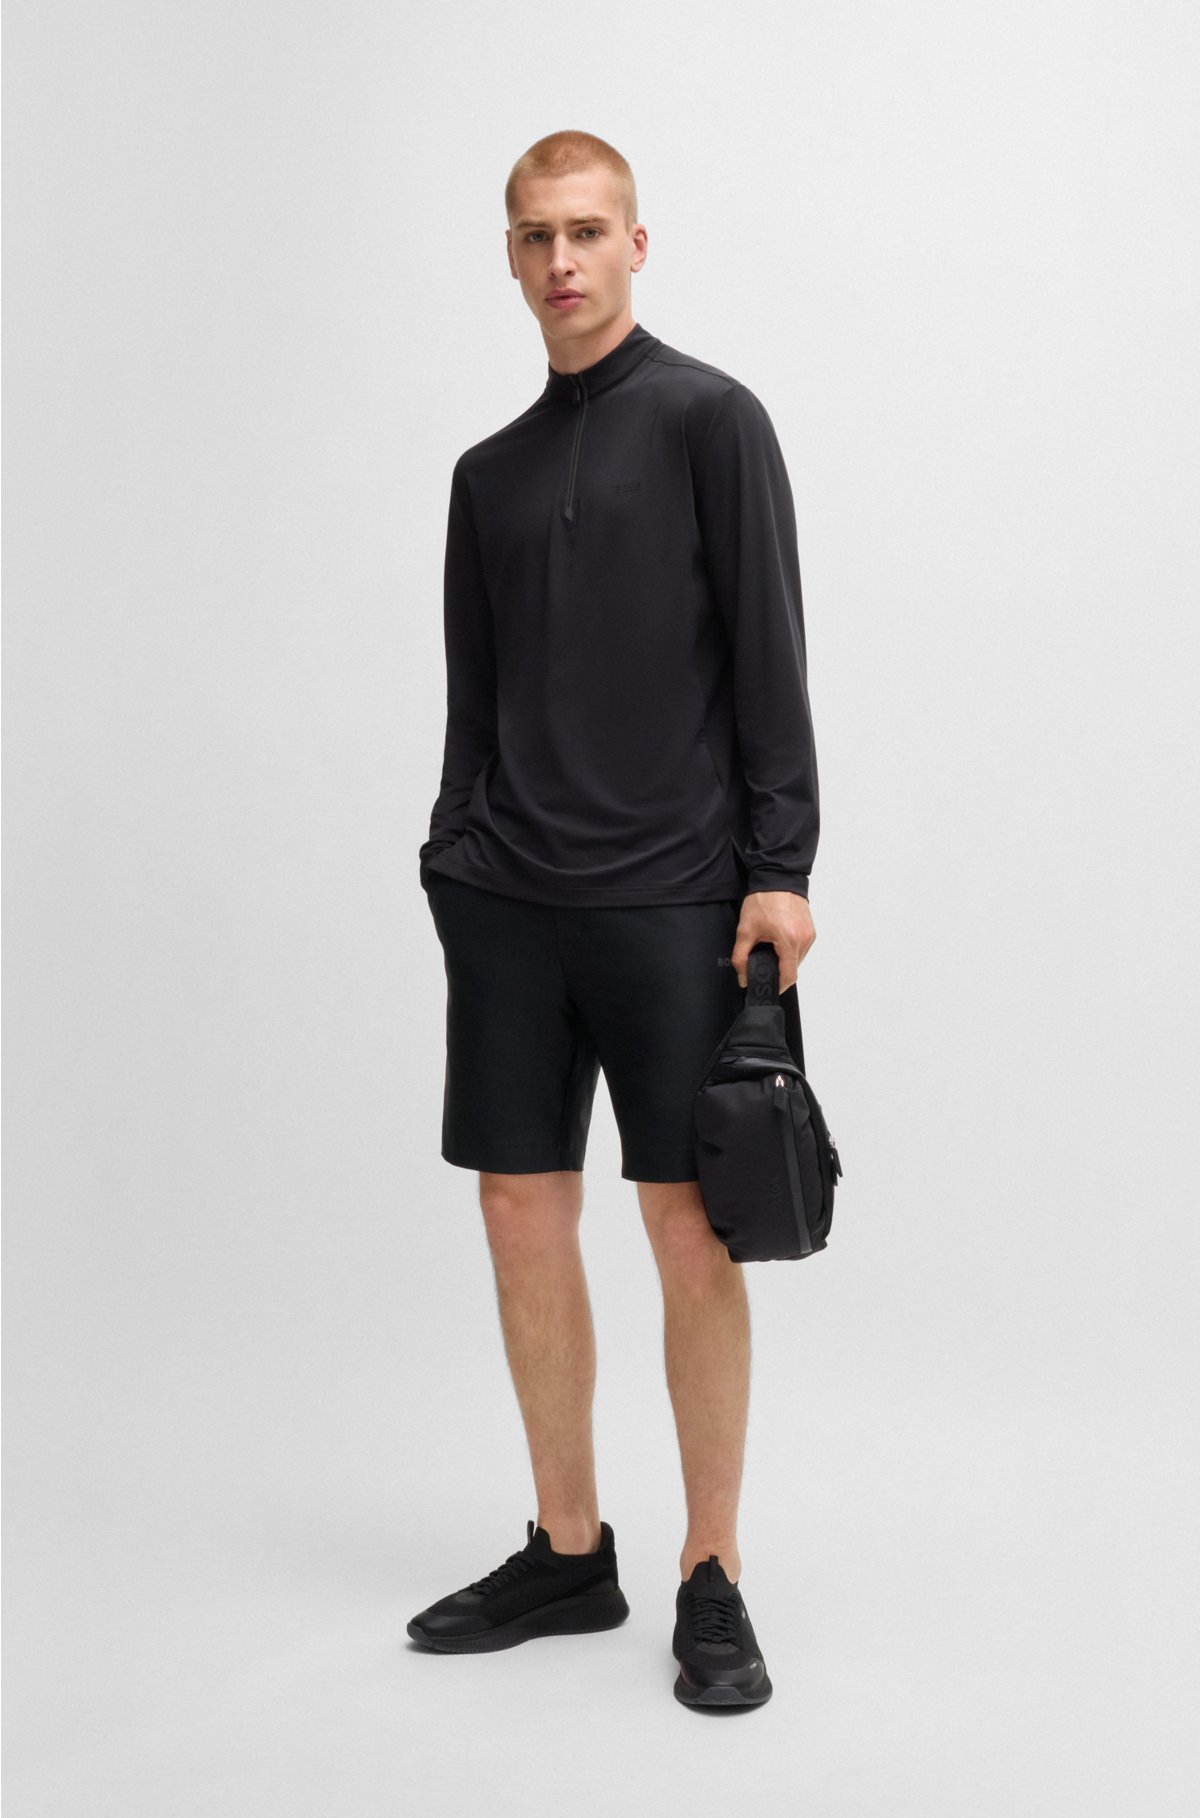 Quick-dry shorts with decorative reflective logo, Black